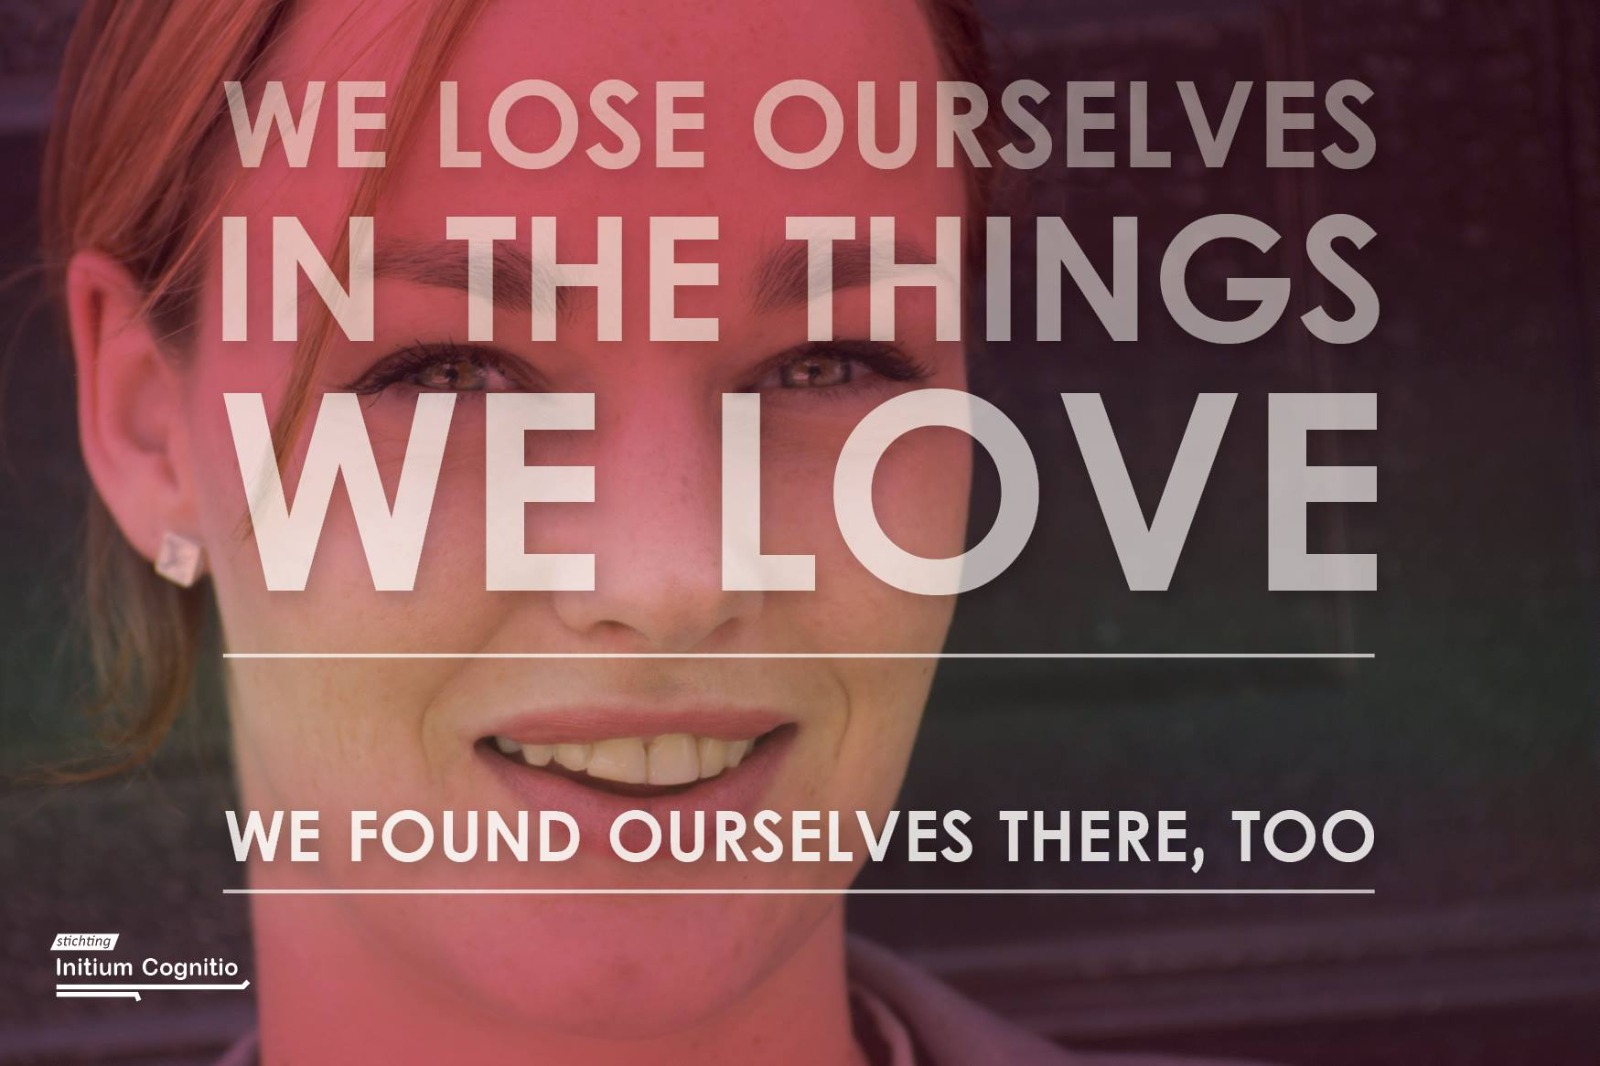 stanley-ter-haar-we-lose-ourselves-in-the-things-we-love-grafisch-ontwerp